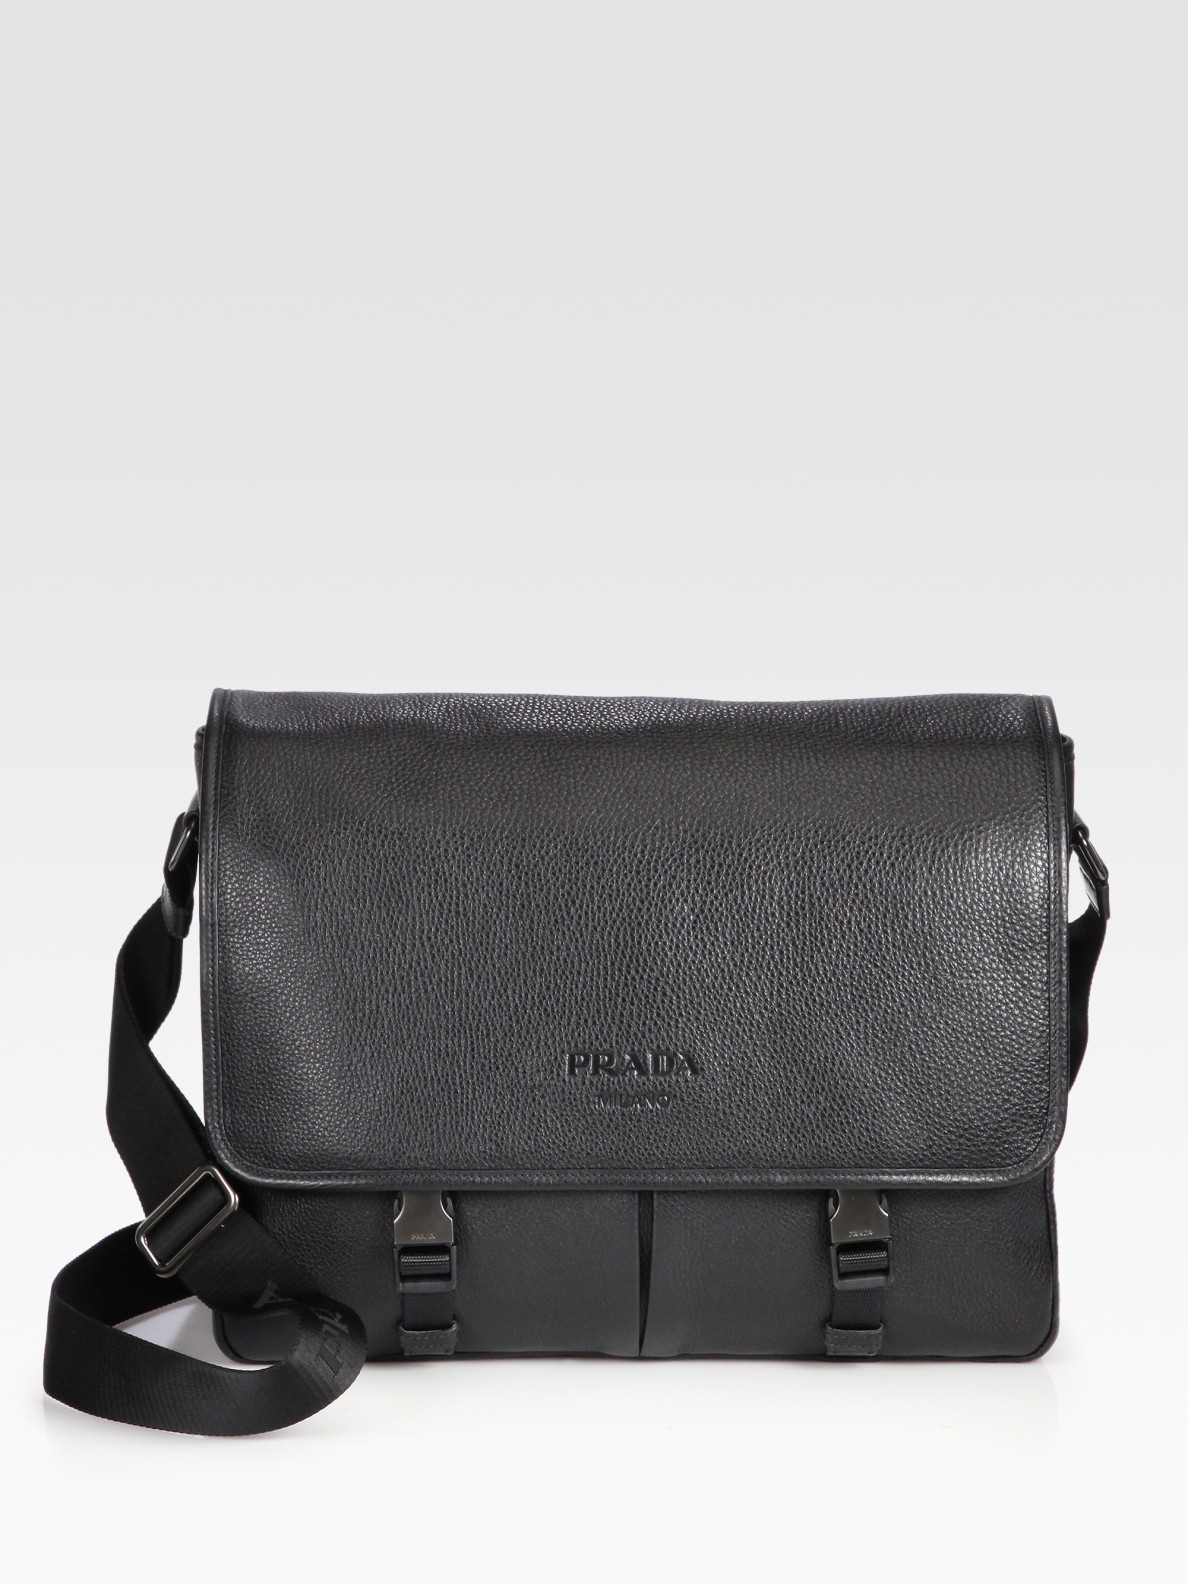 Prada Pebbled Leather Messenger Bag in Black for Men | Lyst